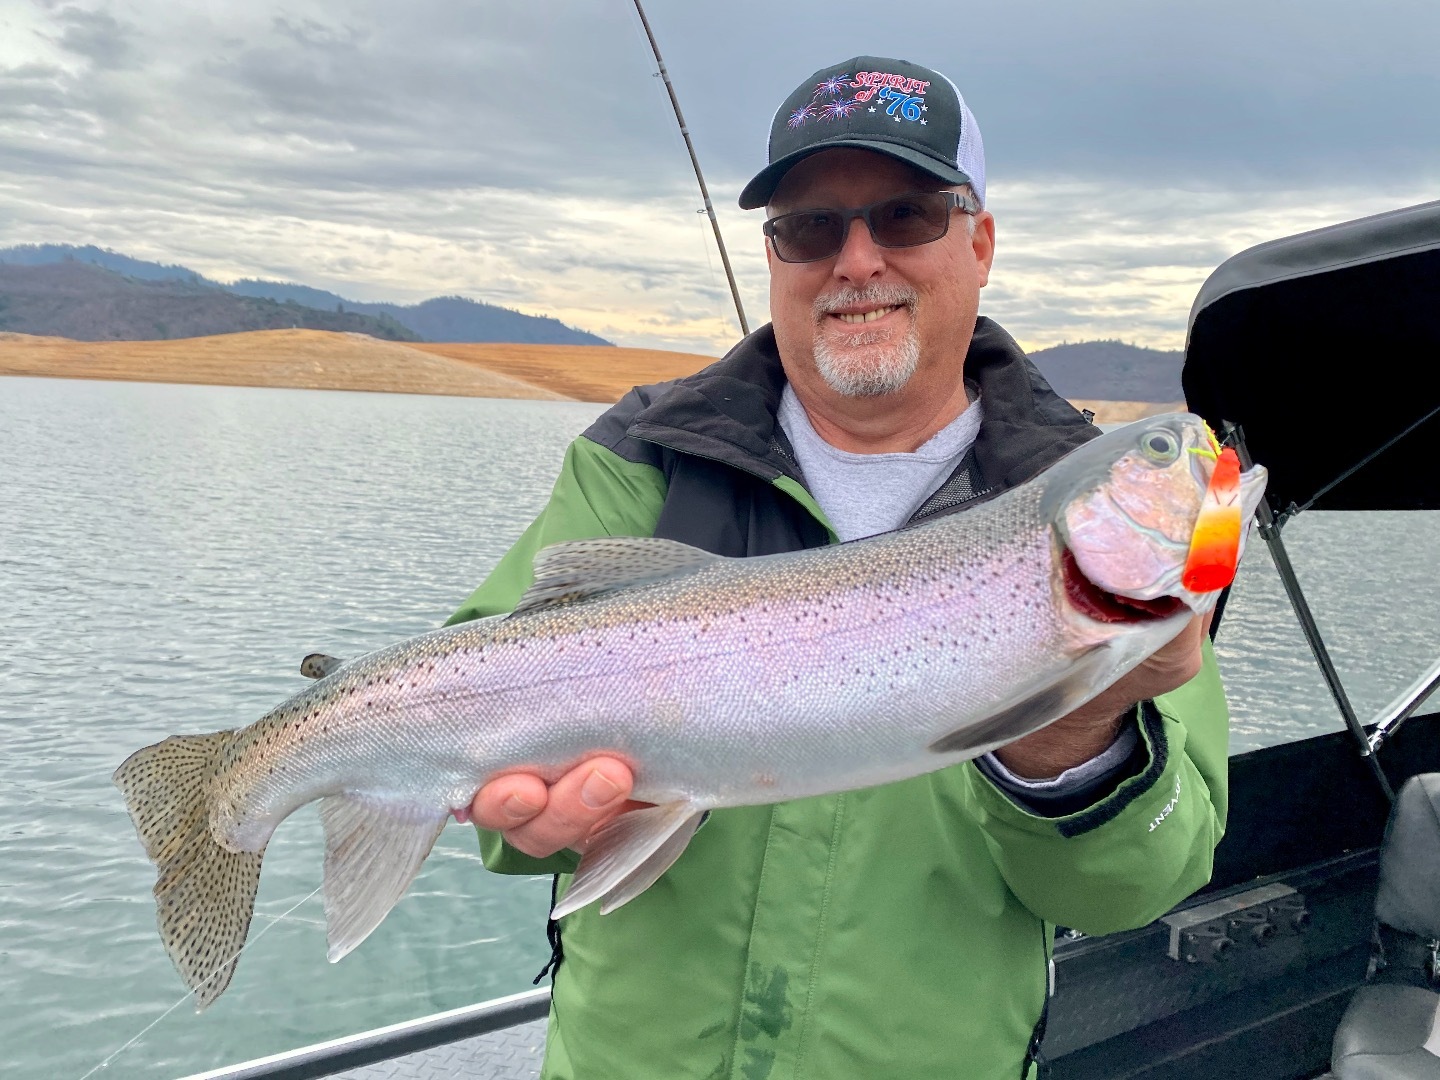 Winter trout fishing on Shasta!